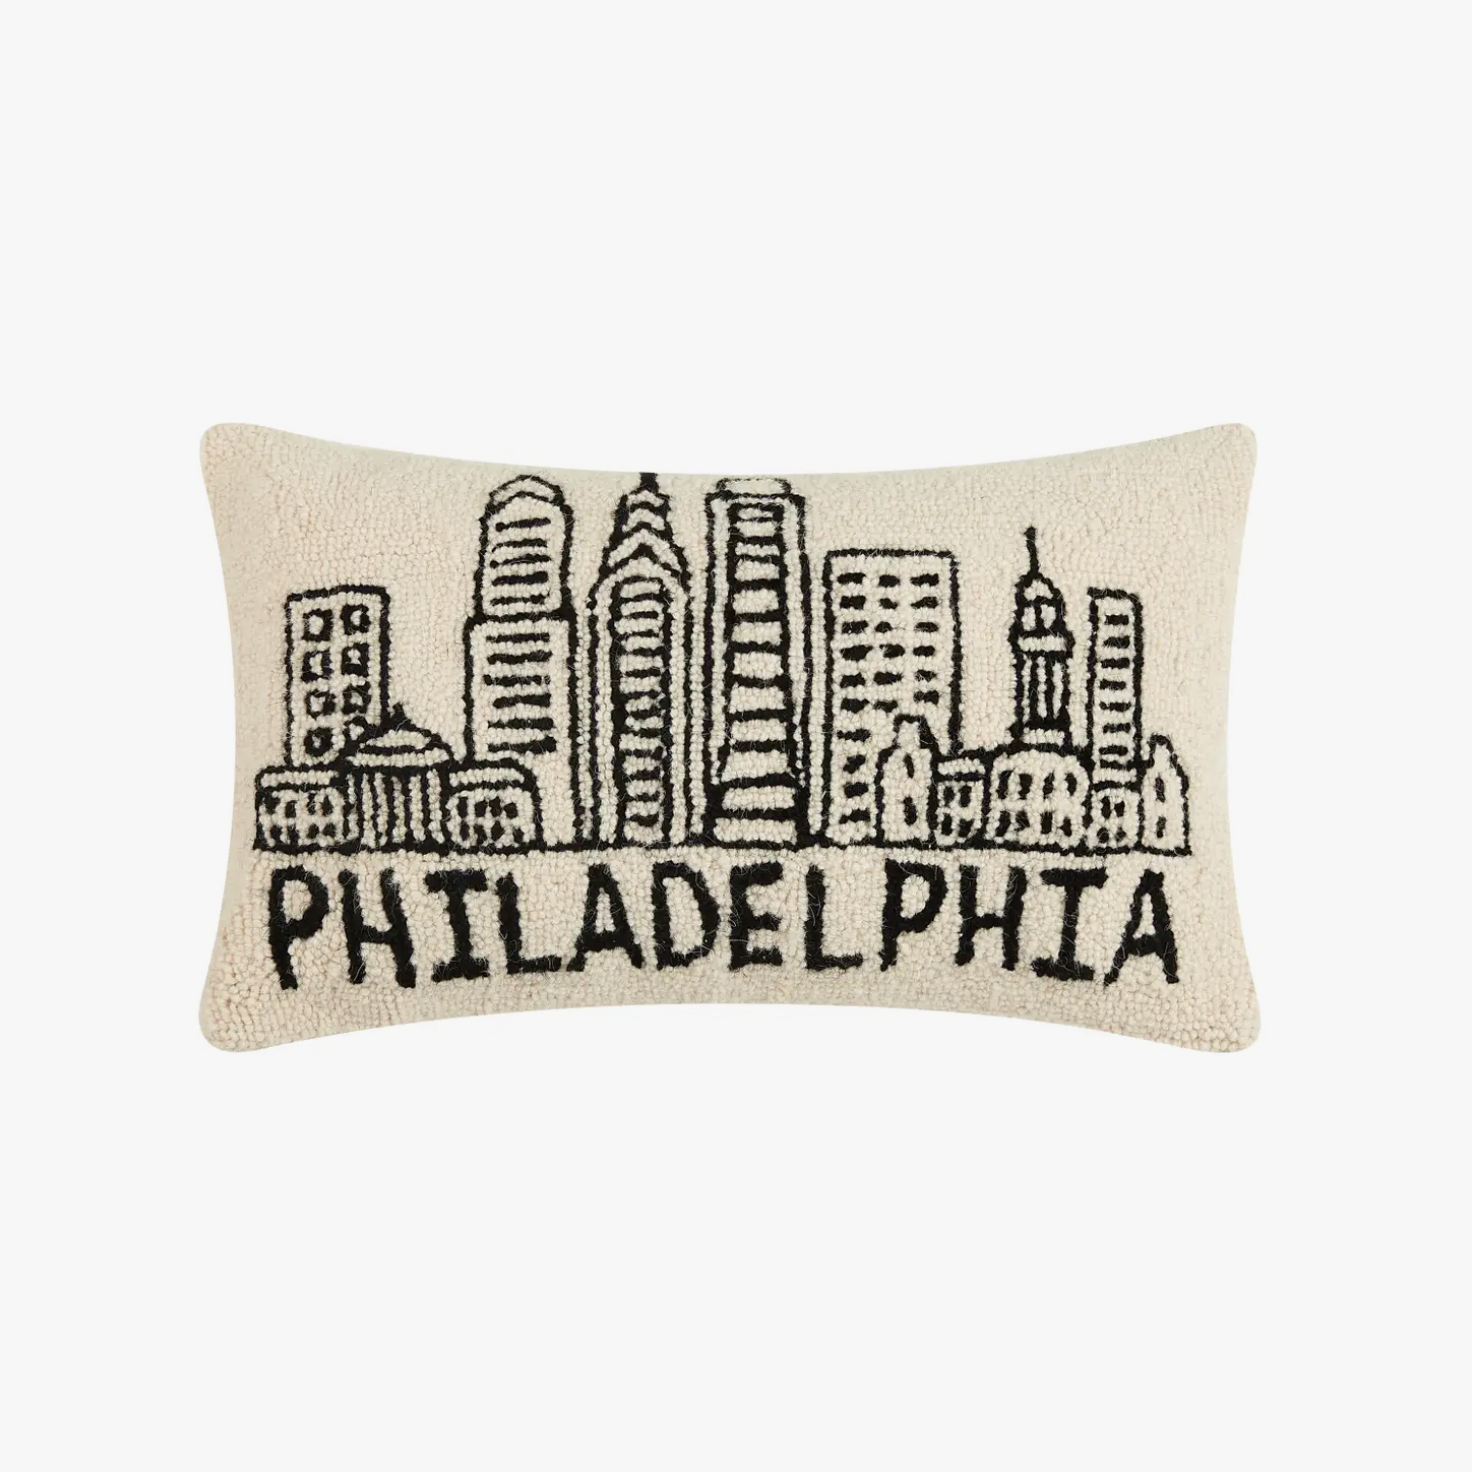 Philadelphia Pillow